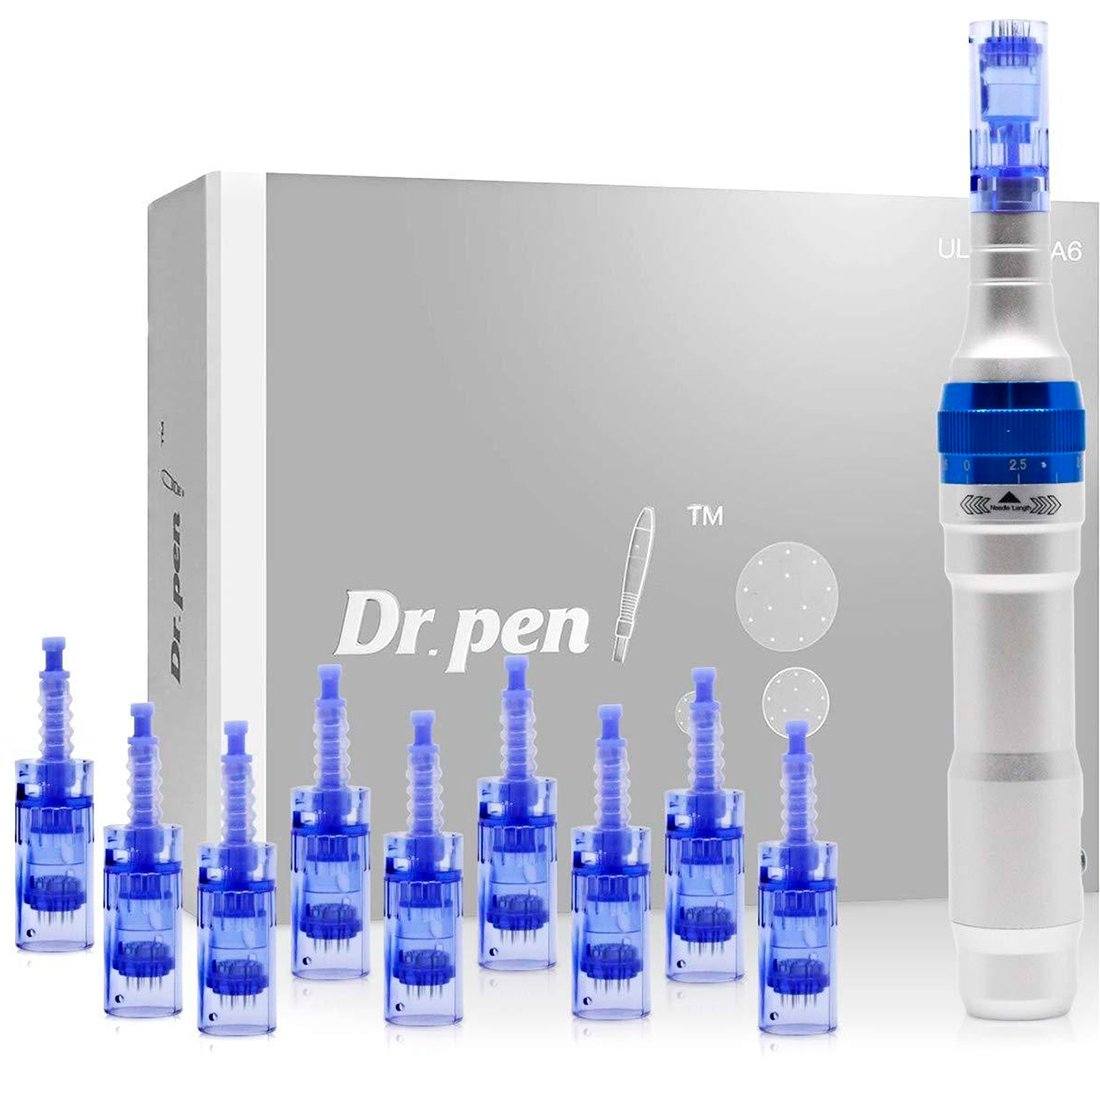 Dr. Pen Ultima A6 Professional Microneedling Pen + 32 Cartridges